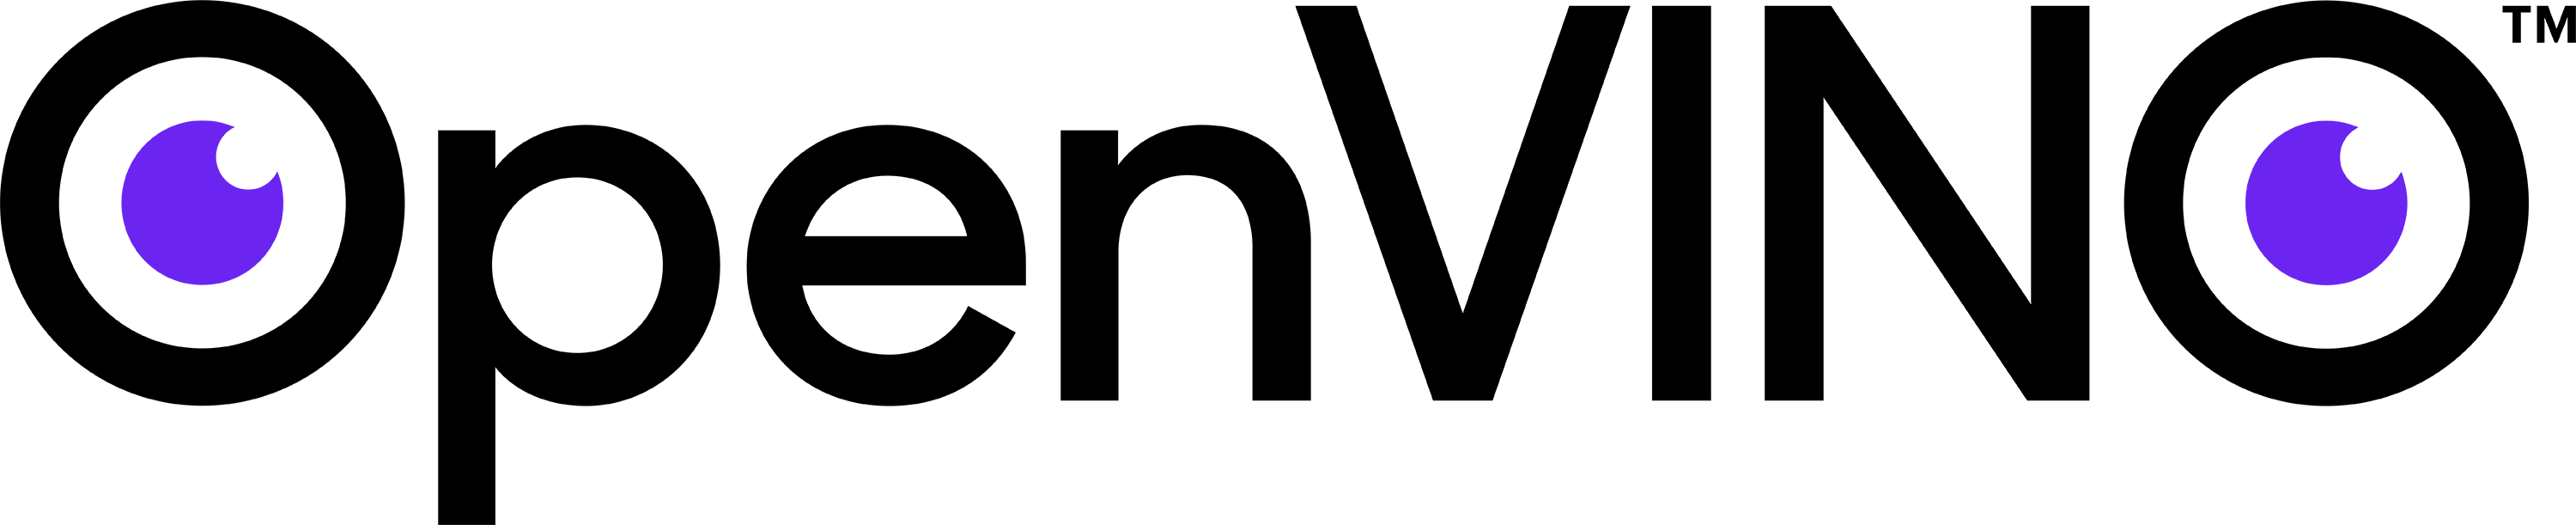 Intel OpenVINO Toolkit logo.png